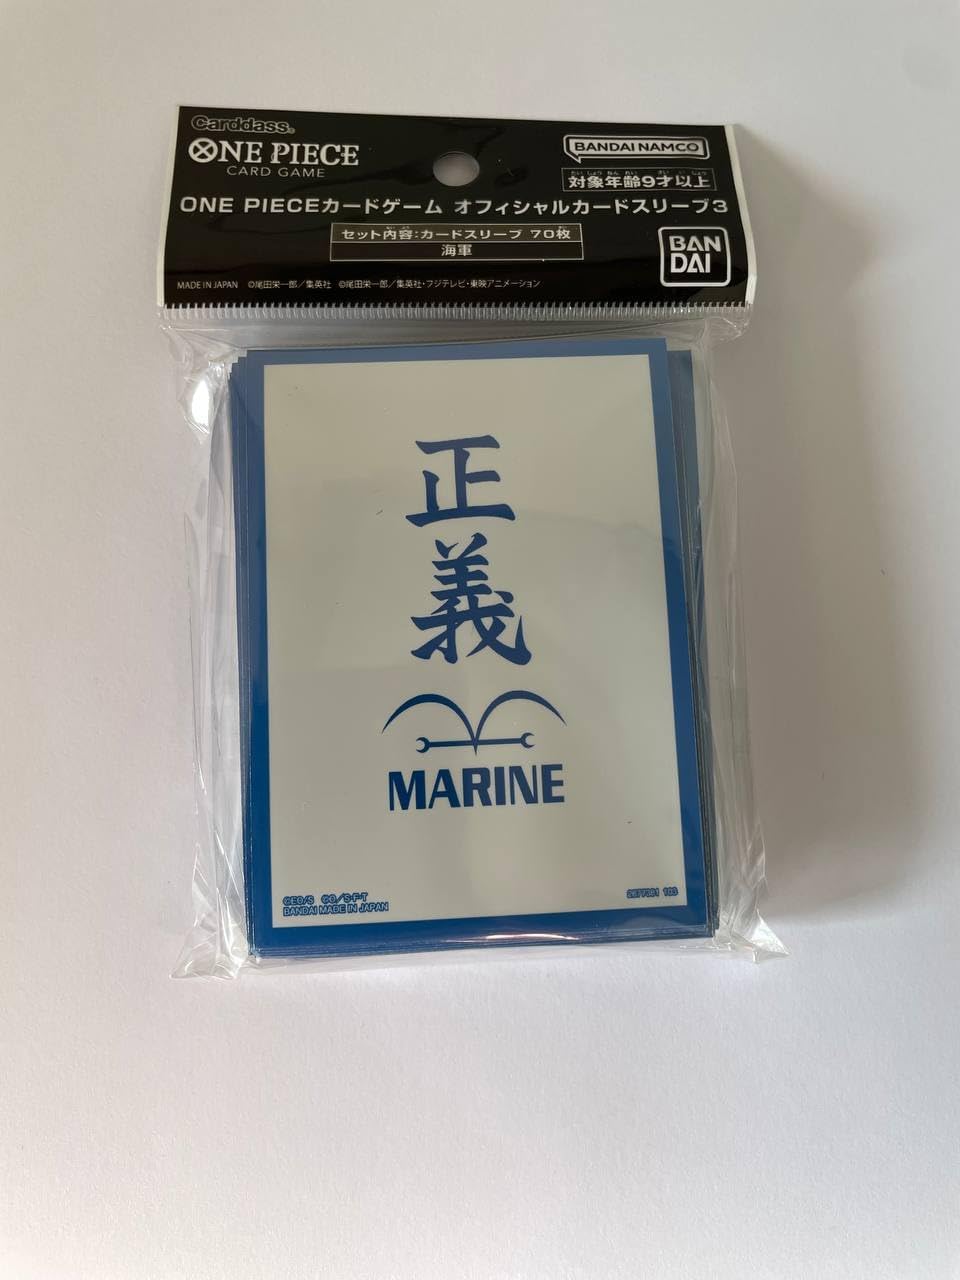 One Piece Trading Card Game - Navy / Marine - Sleeves / Hüllen - 70 Stück - Original Bandai